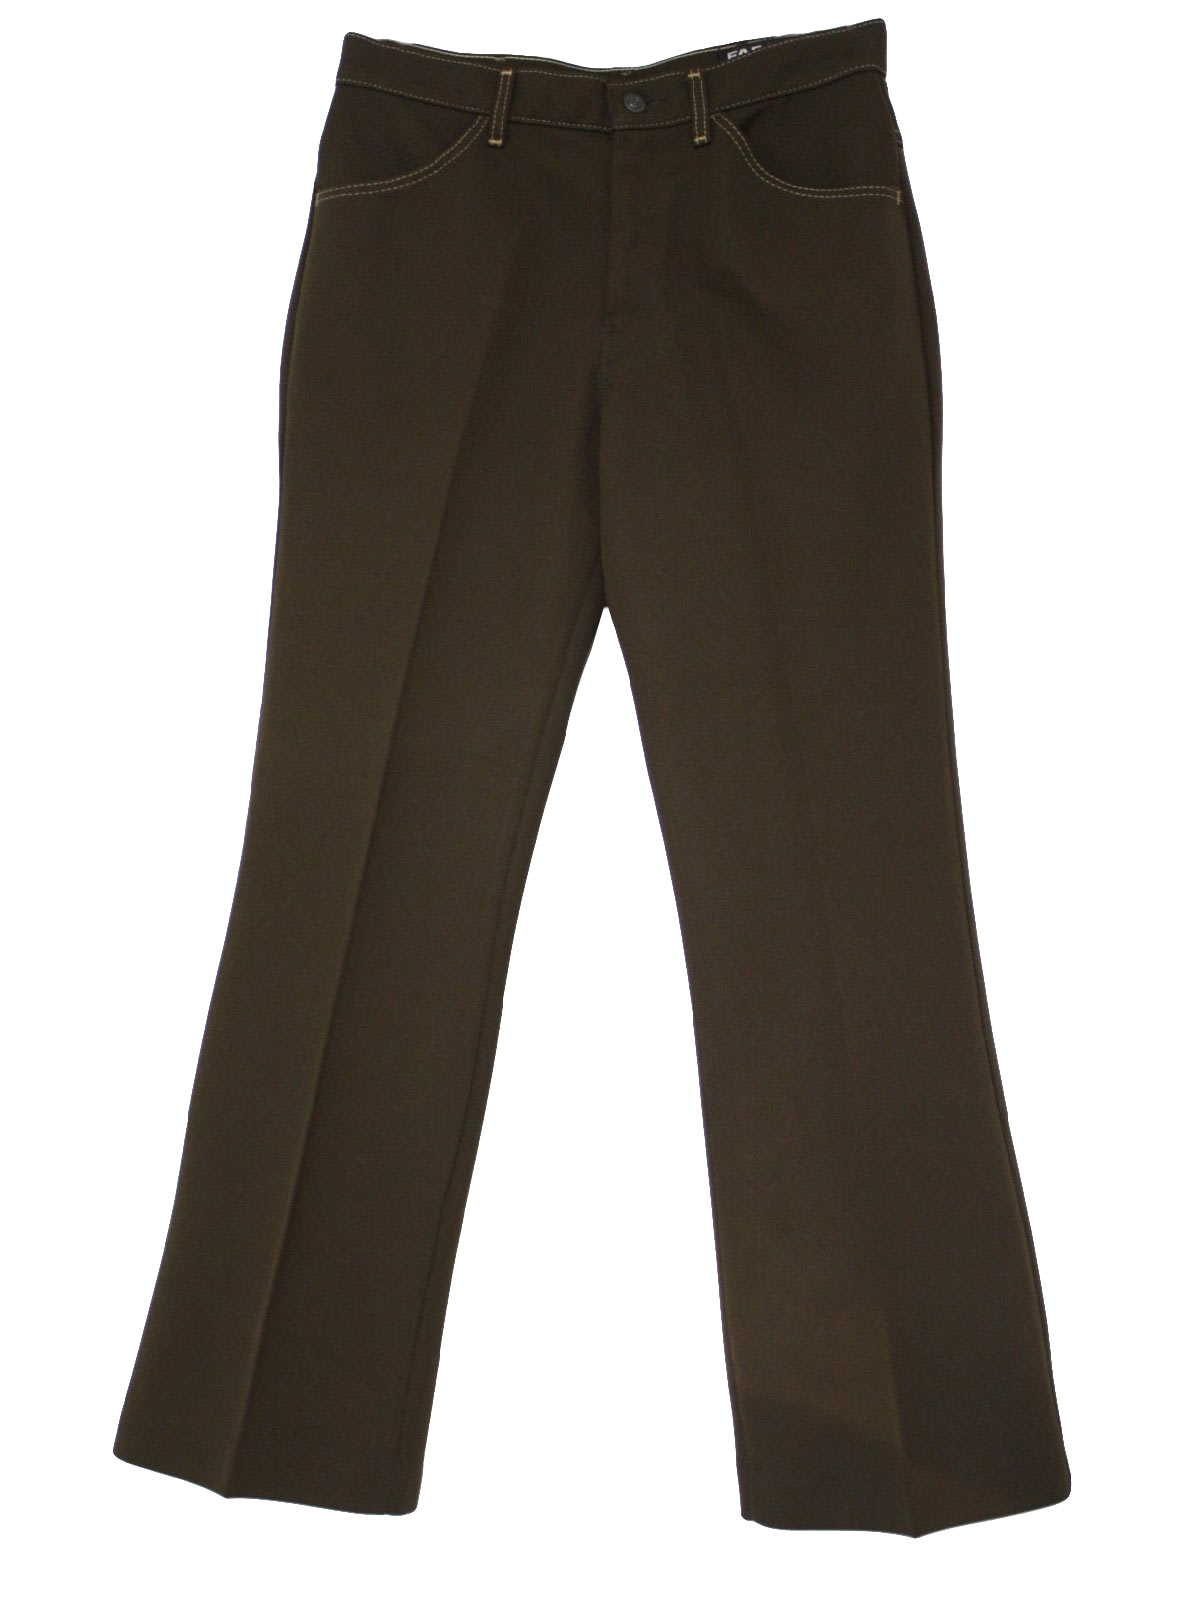 Vintage Farah 1970s Bellbottom Pants: 70s -Farah- Mens dark brown ...